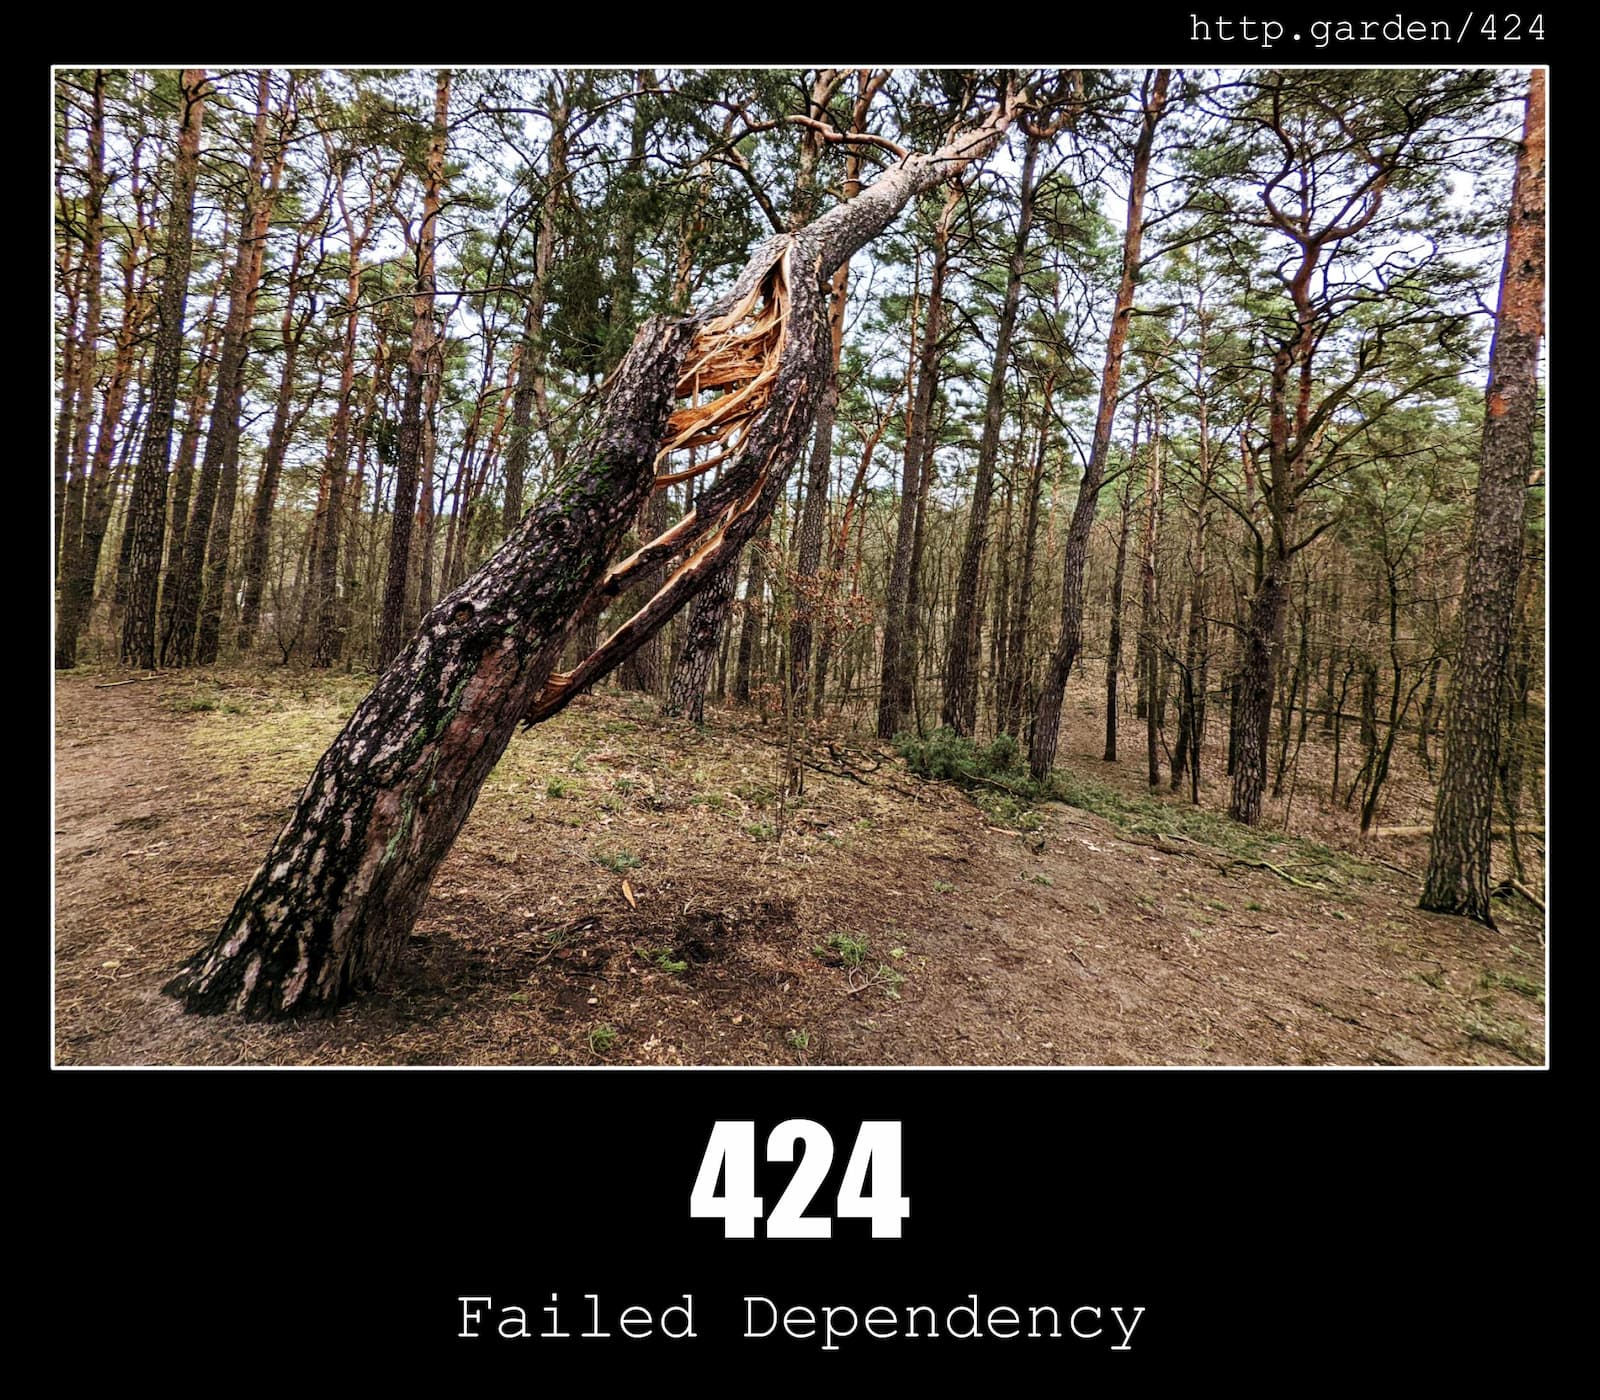 HTTP Status Code 424 Failed Dependency & Gardening